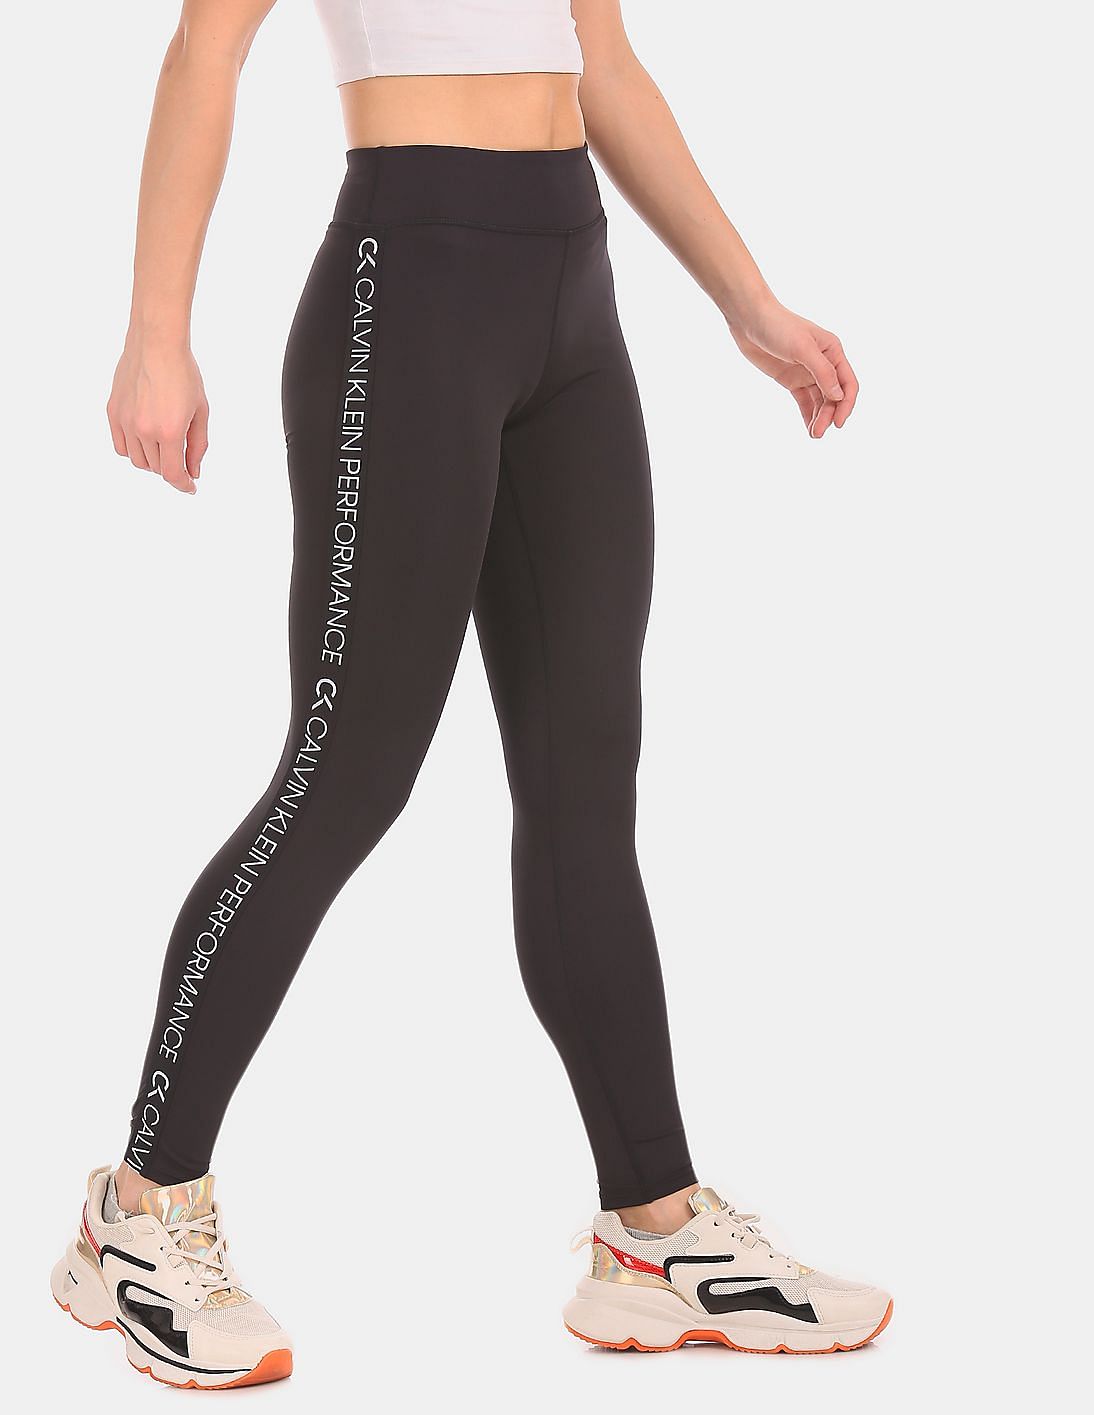 Calvin Klein Logo Capri Leggings - Macy's | Yoga pants hot, Capri leggings,  Fashion